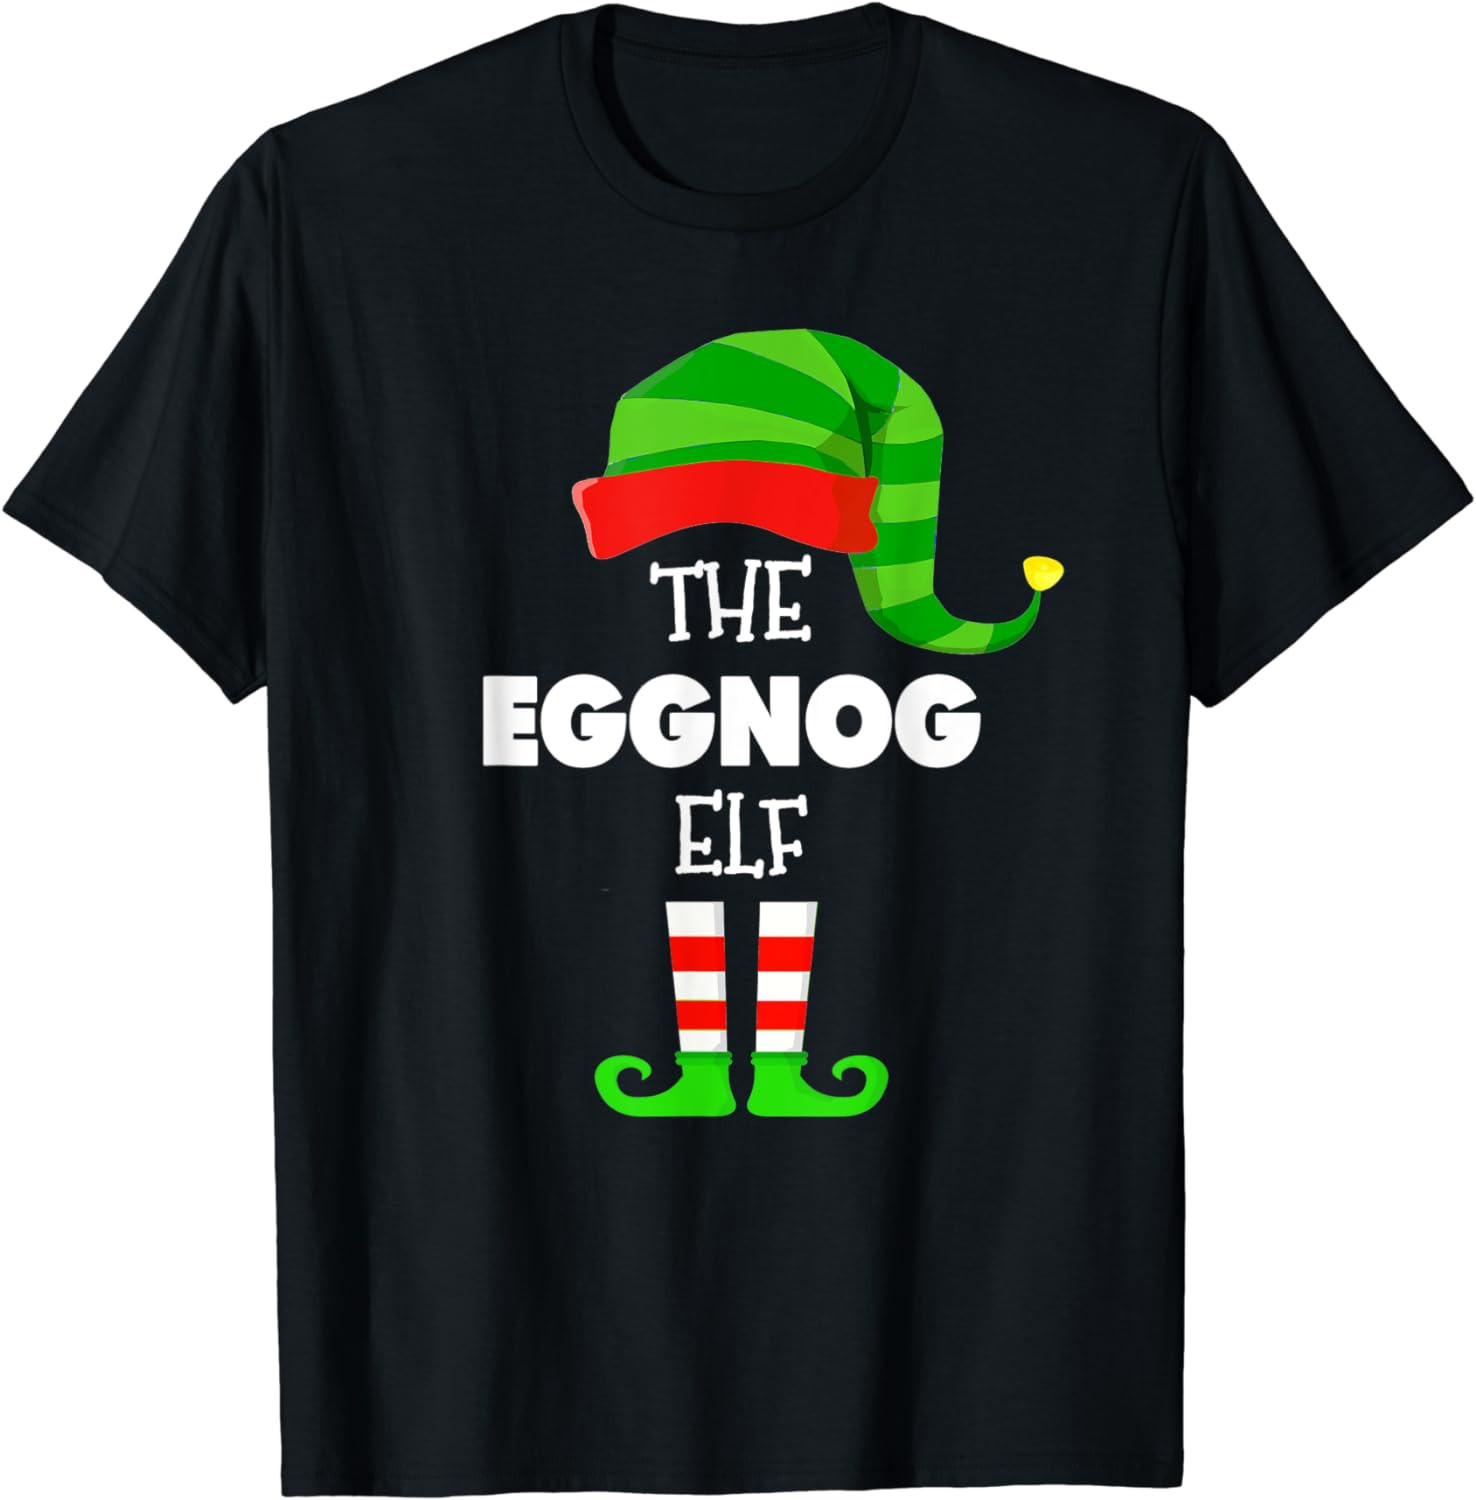 The Eggnog Elf Group Matching Family Christmas Pjs T-Shirt